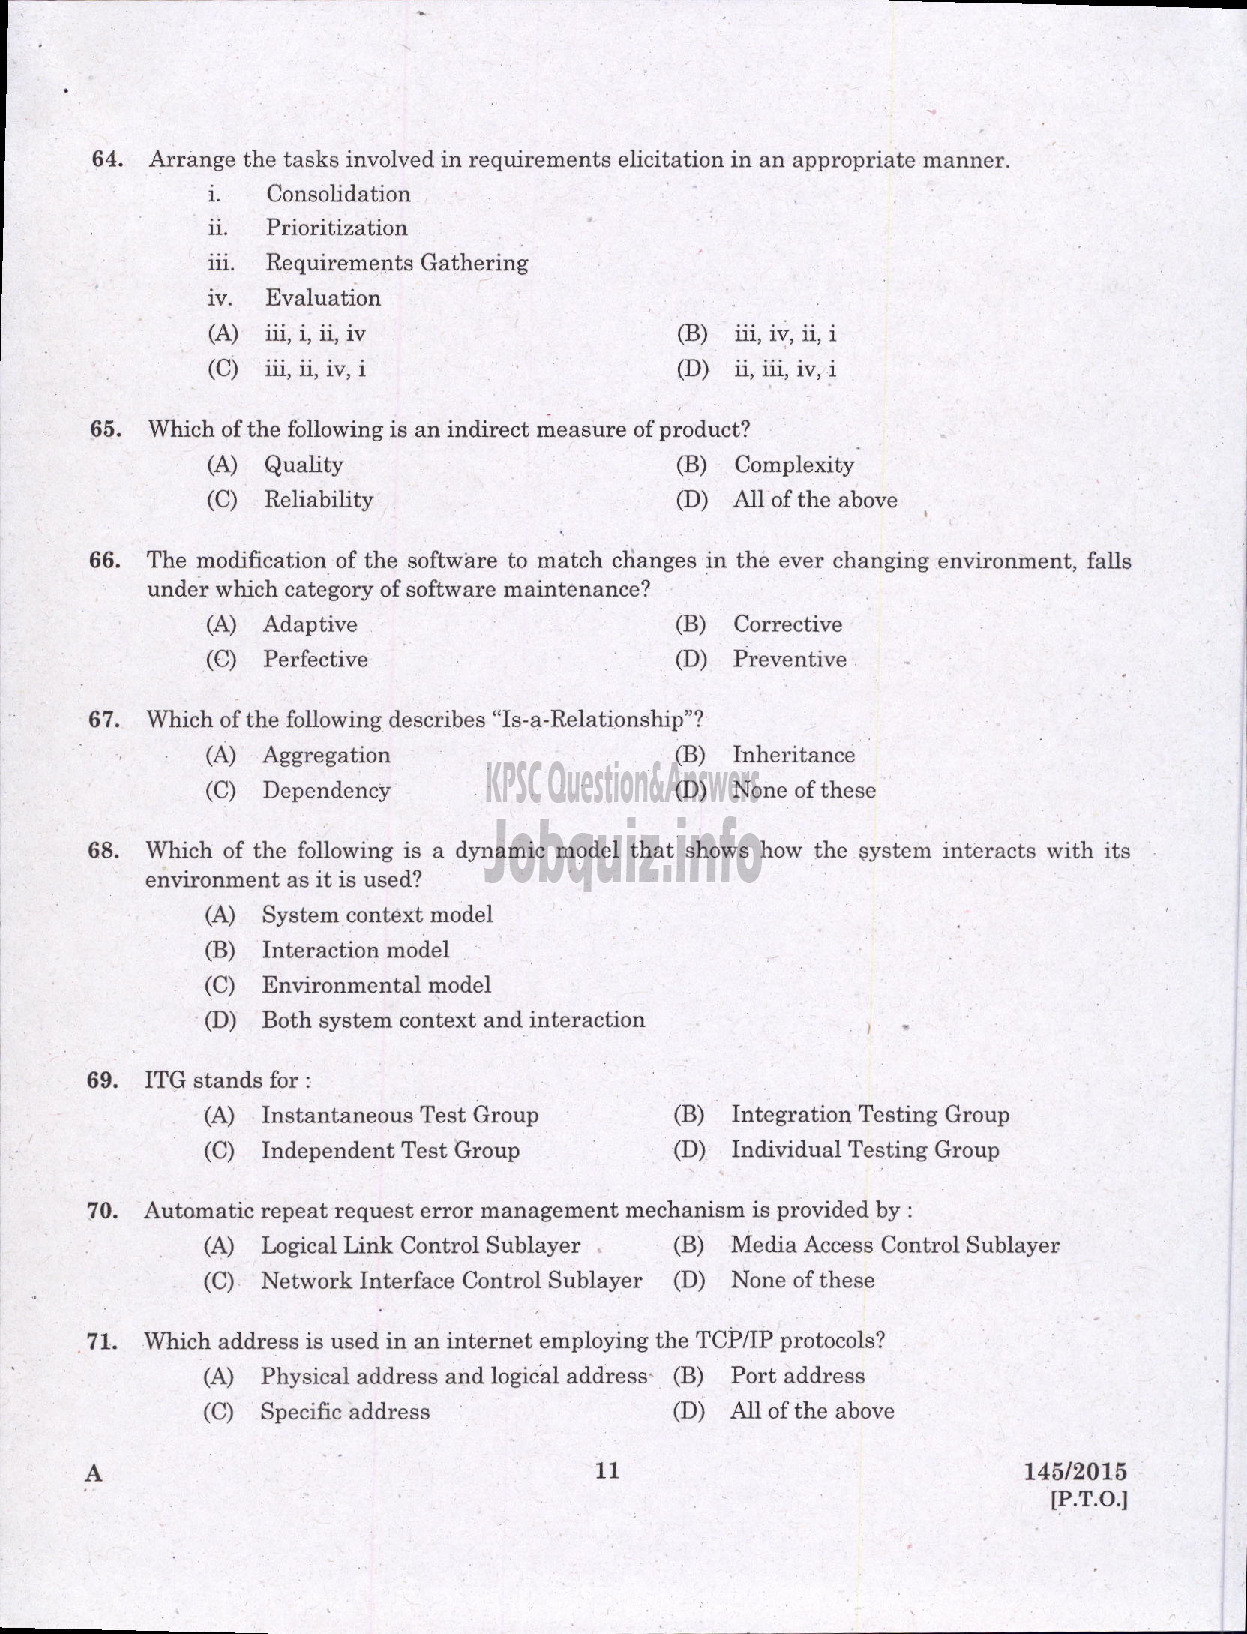 Kerala PSC Question Paper - PROGRAMMER KPSC-9